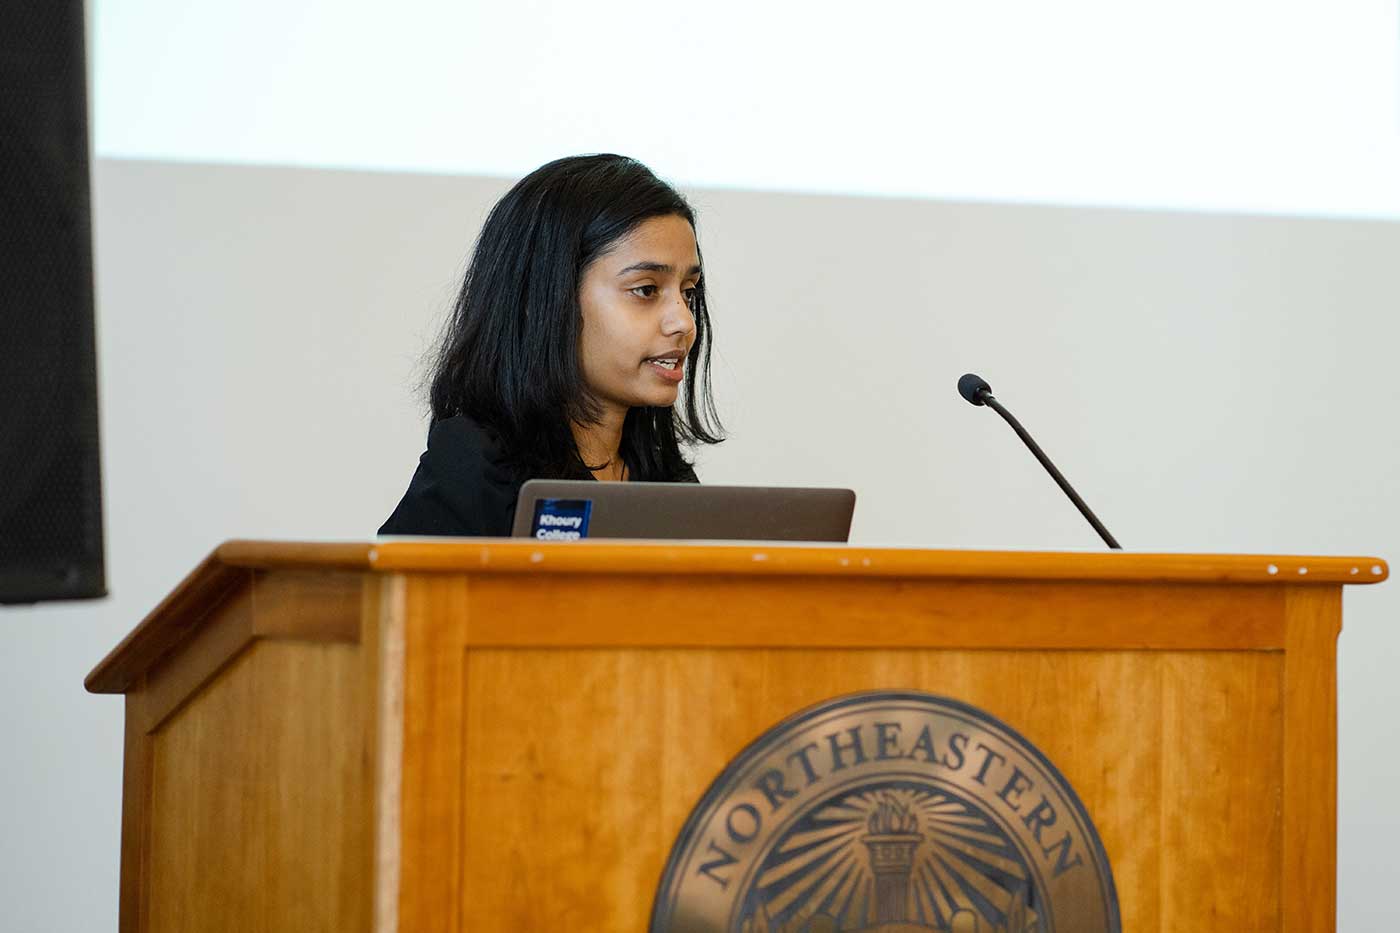 Vidya Ganesh presents her project standing behind a podium